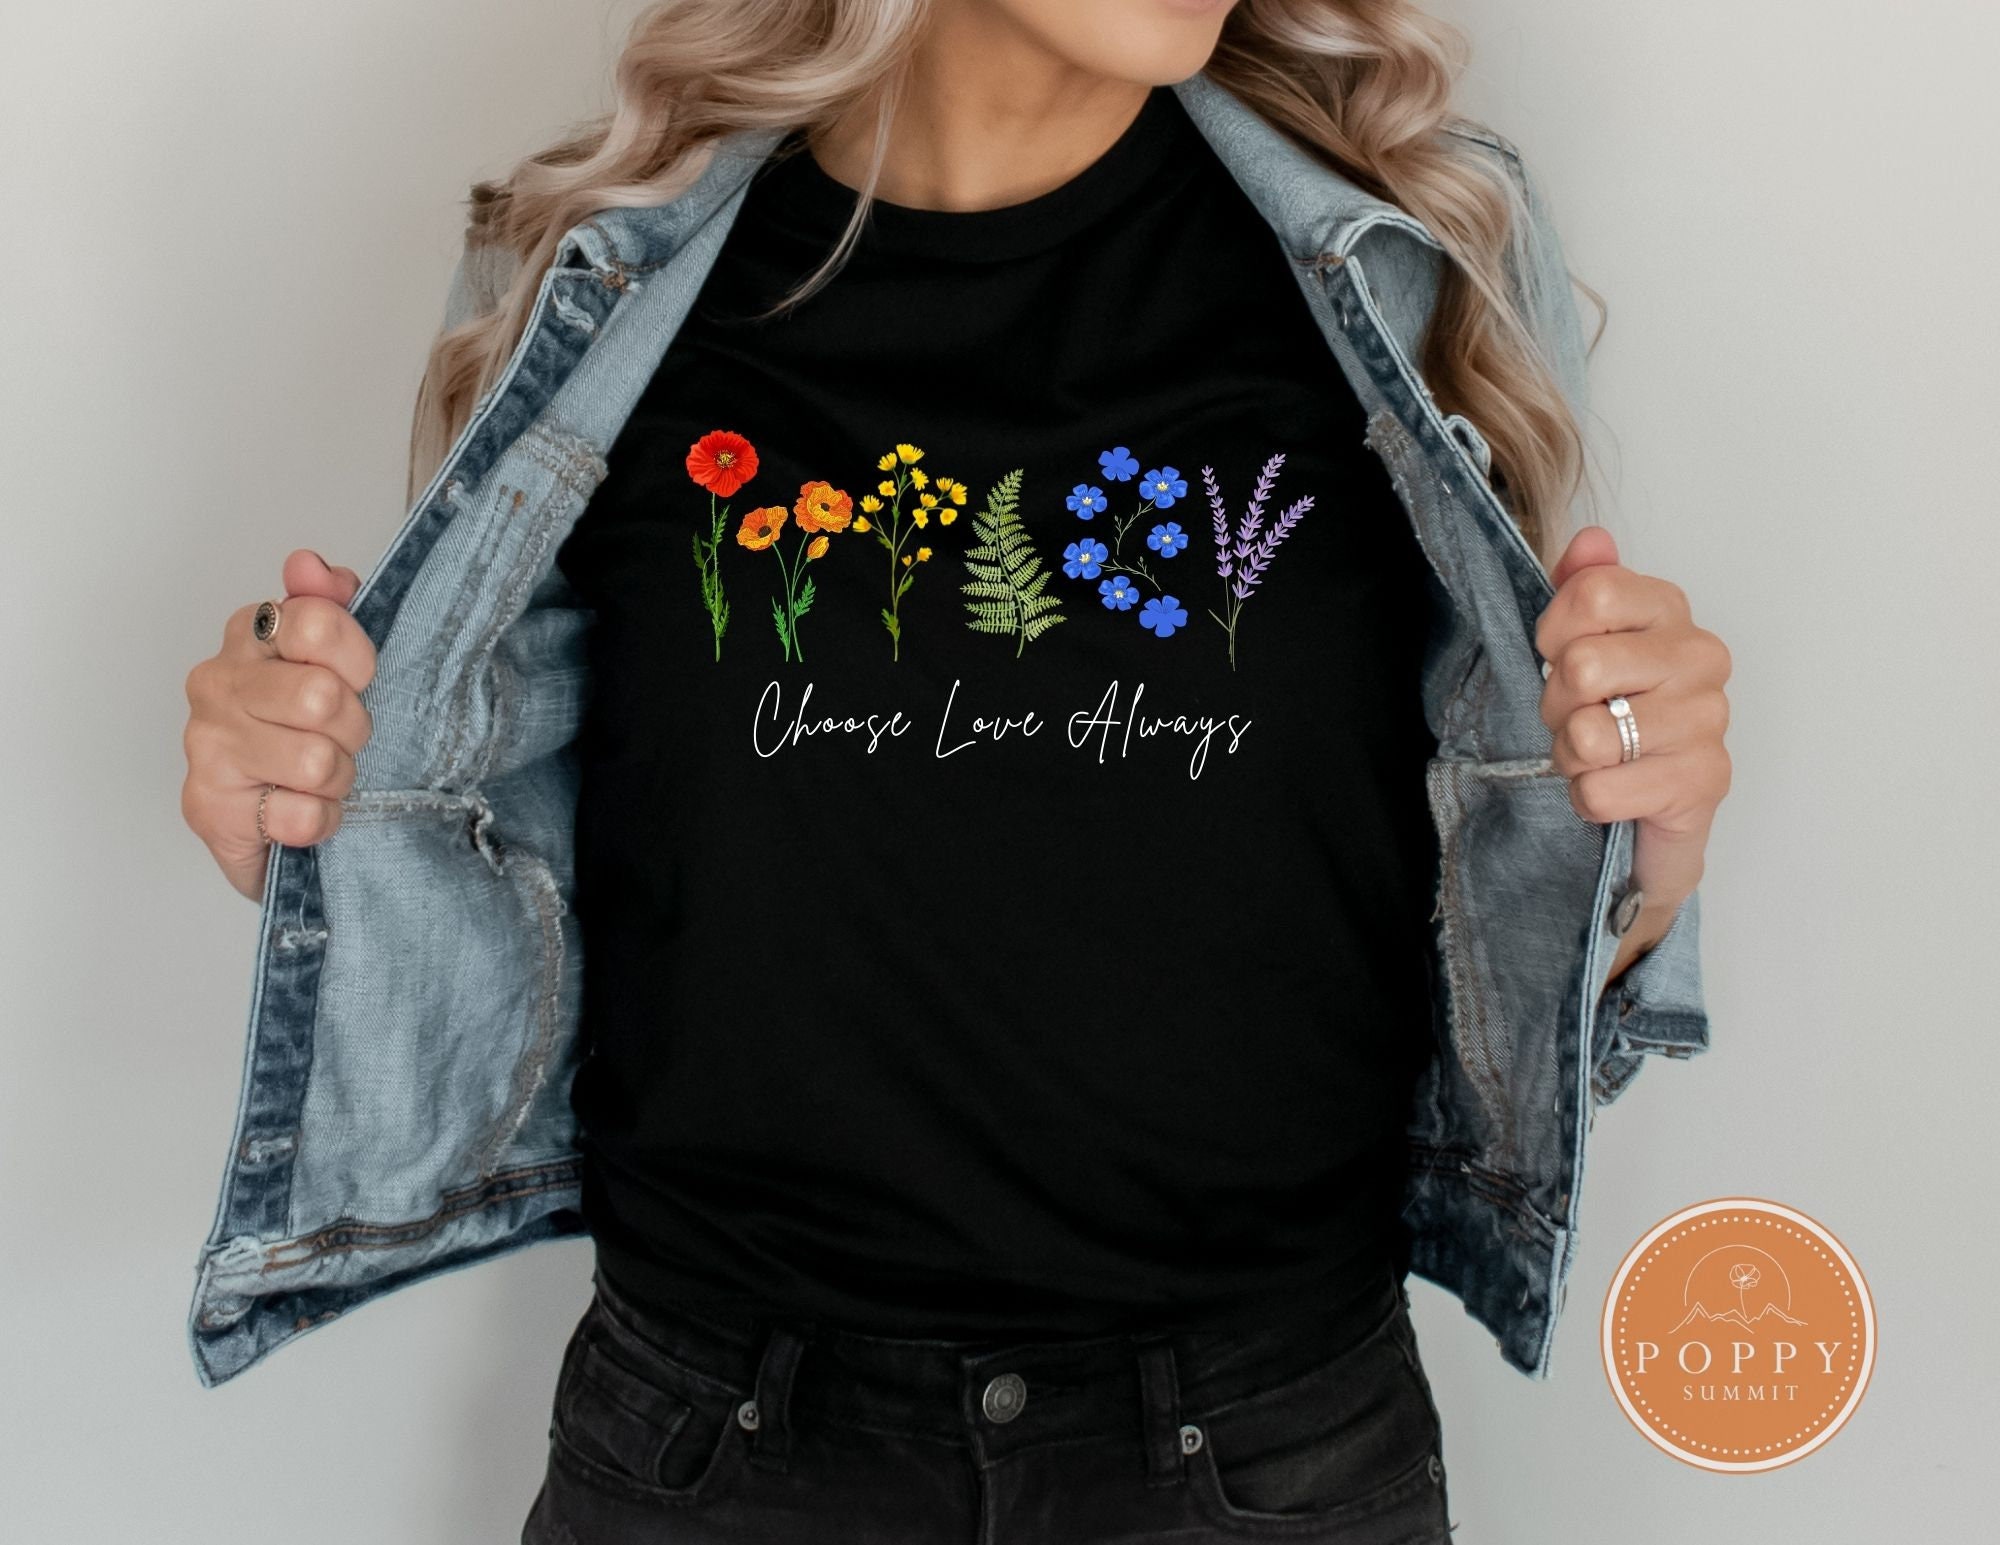 Discover Rainbow Pride Wildflowers T-Shirt